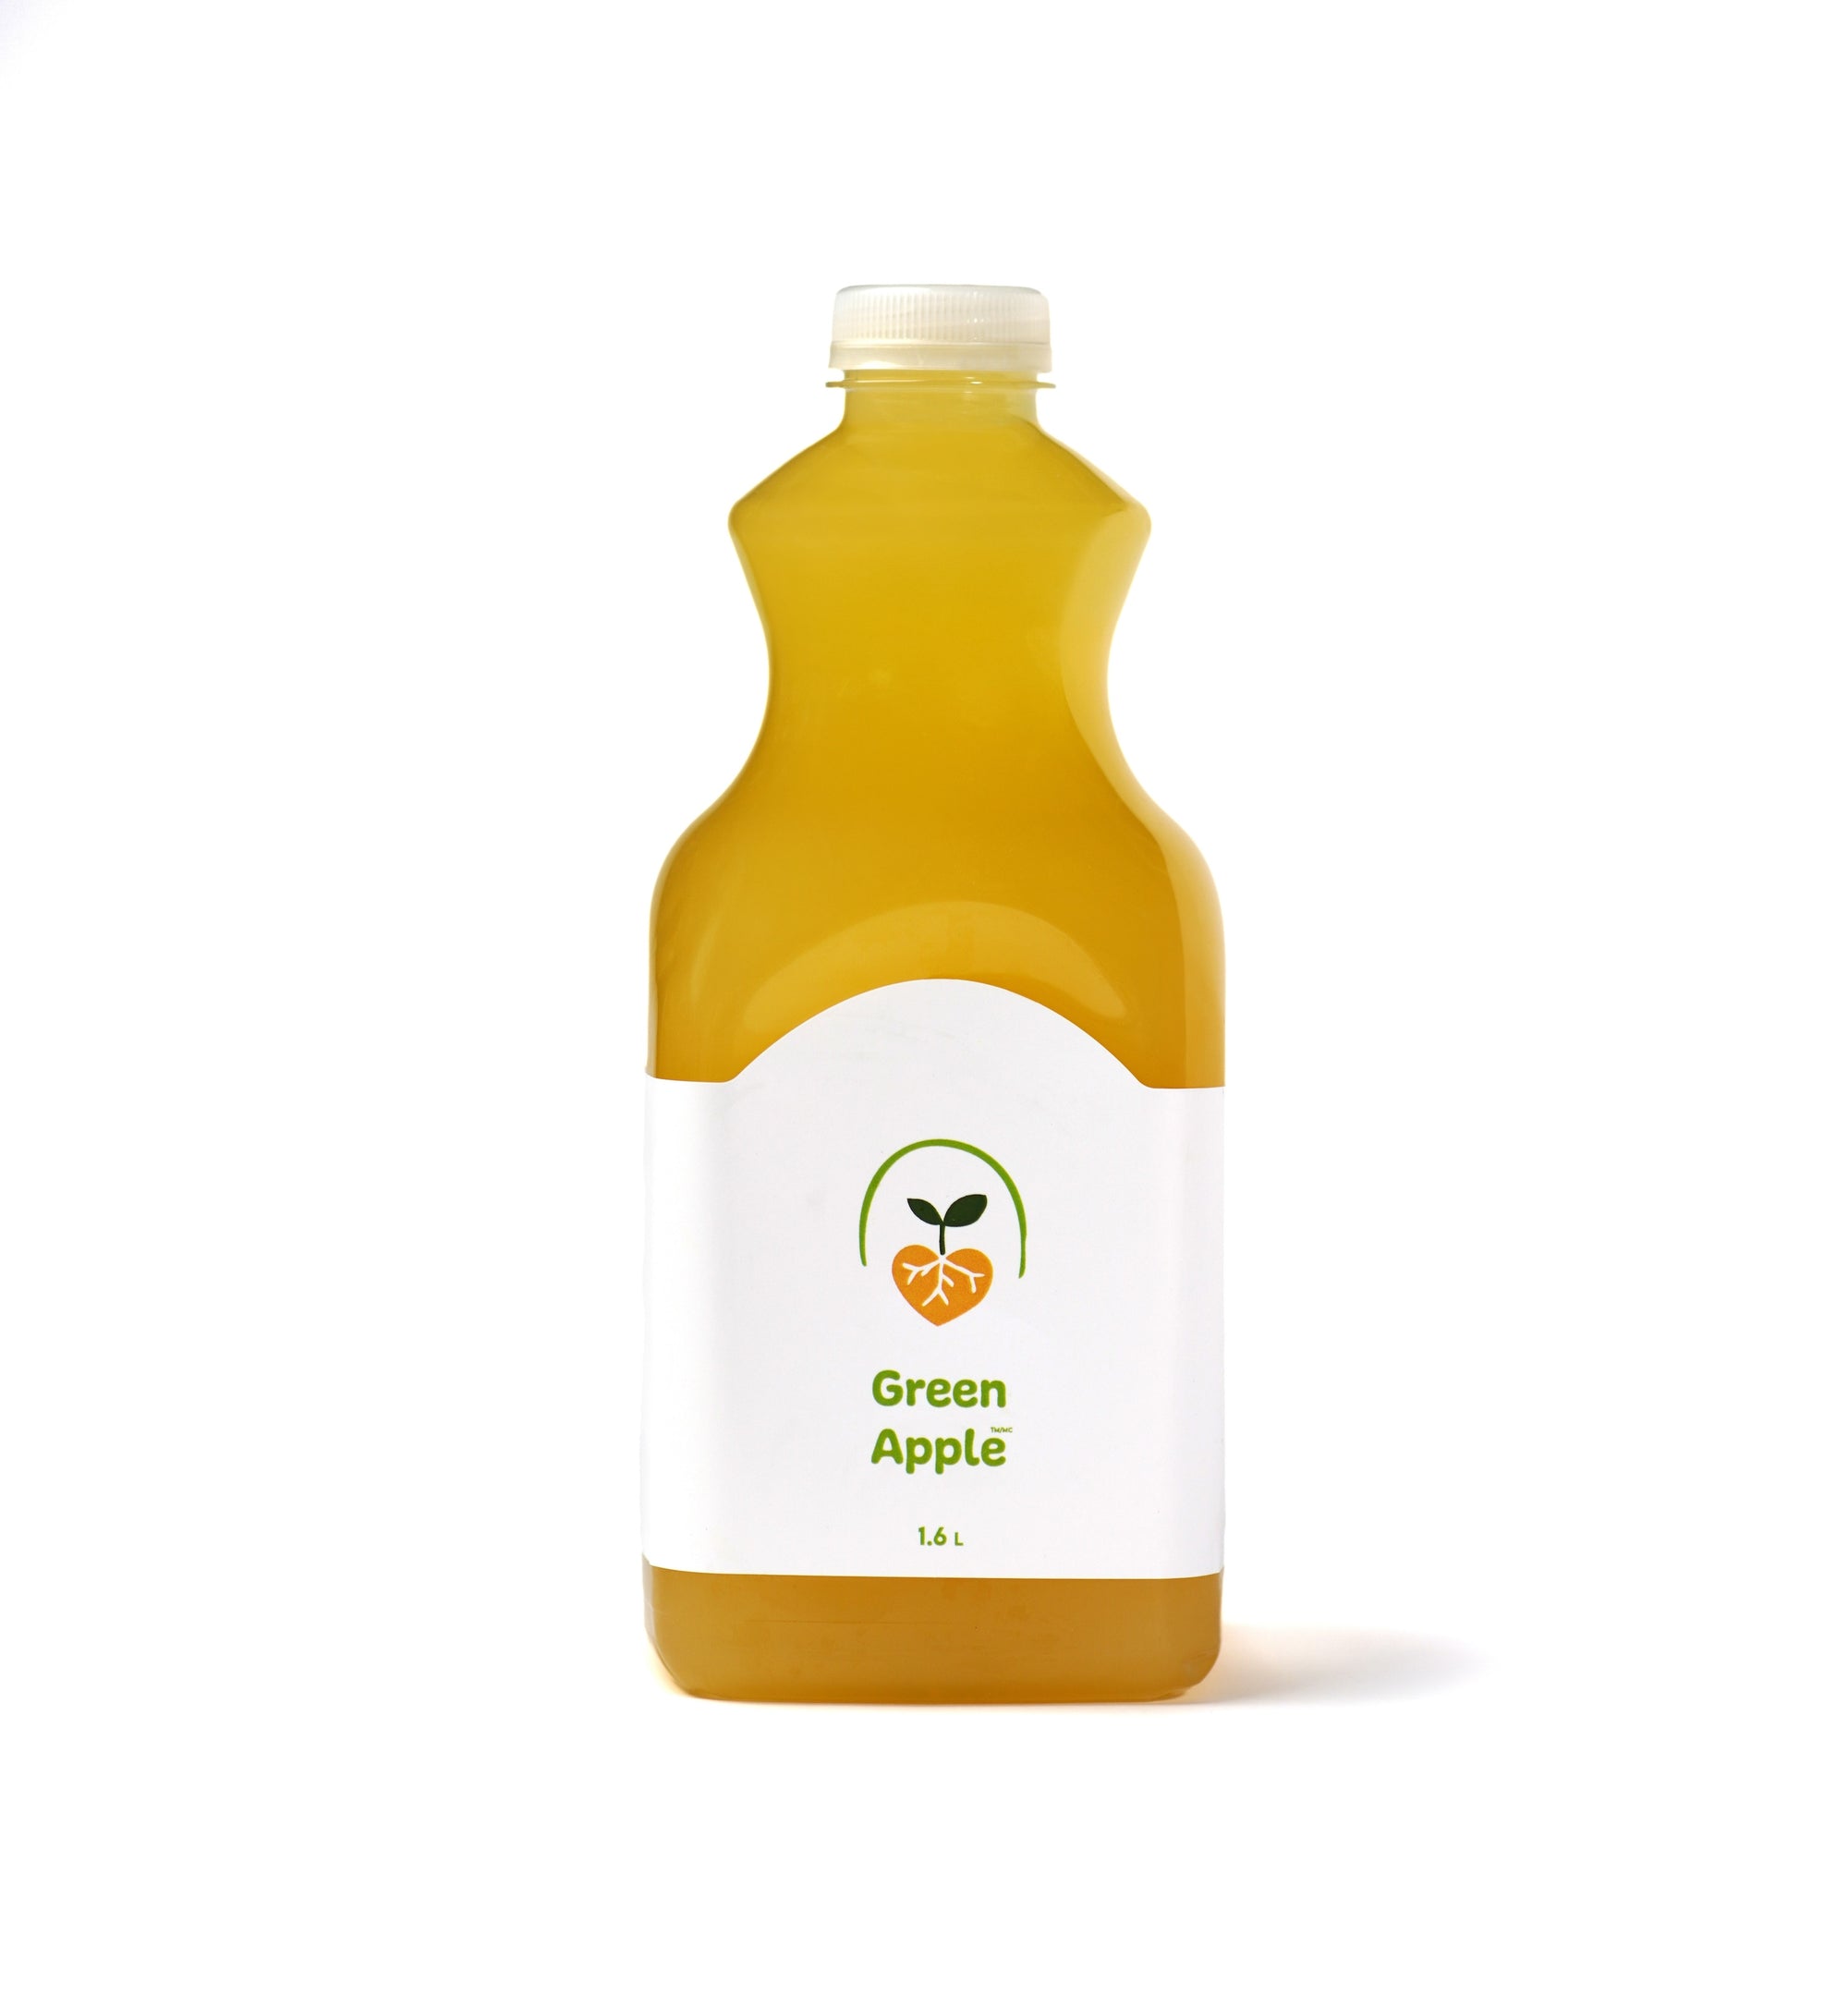 The Good Root 100% Green Apple Juice